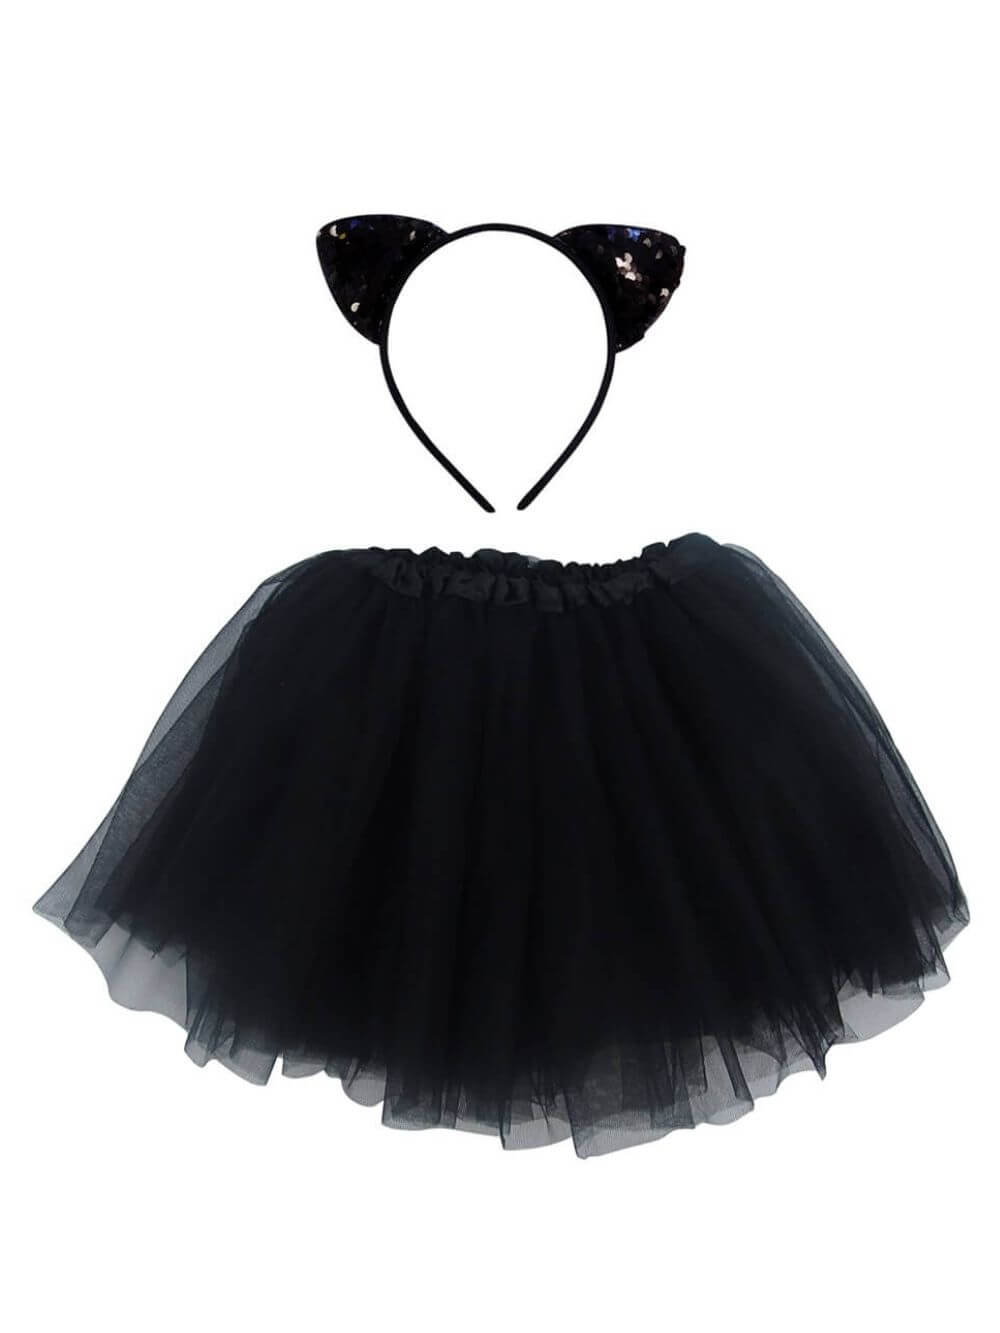 Adult Black Cat Costume - Tutu Skirt & Flip Sequin Headband Set for Adult or Plus Size - Sydney So Sweet